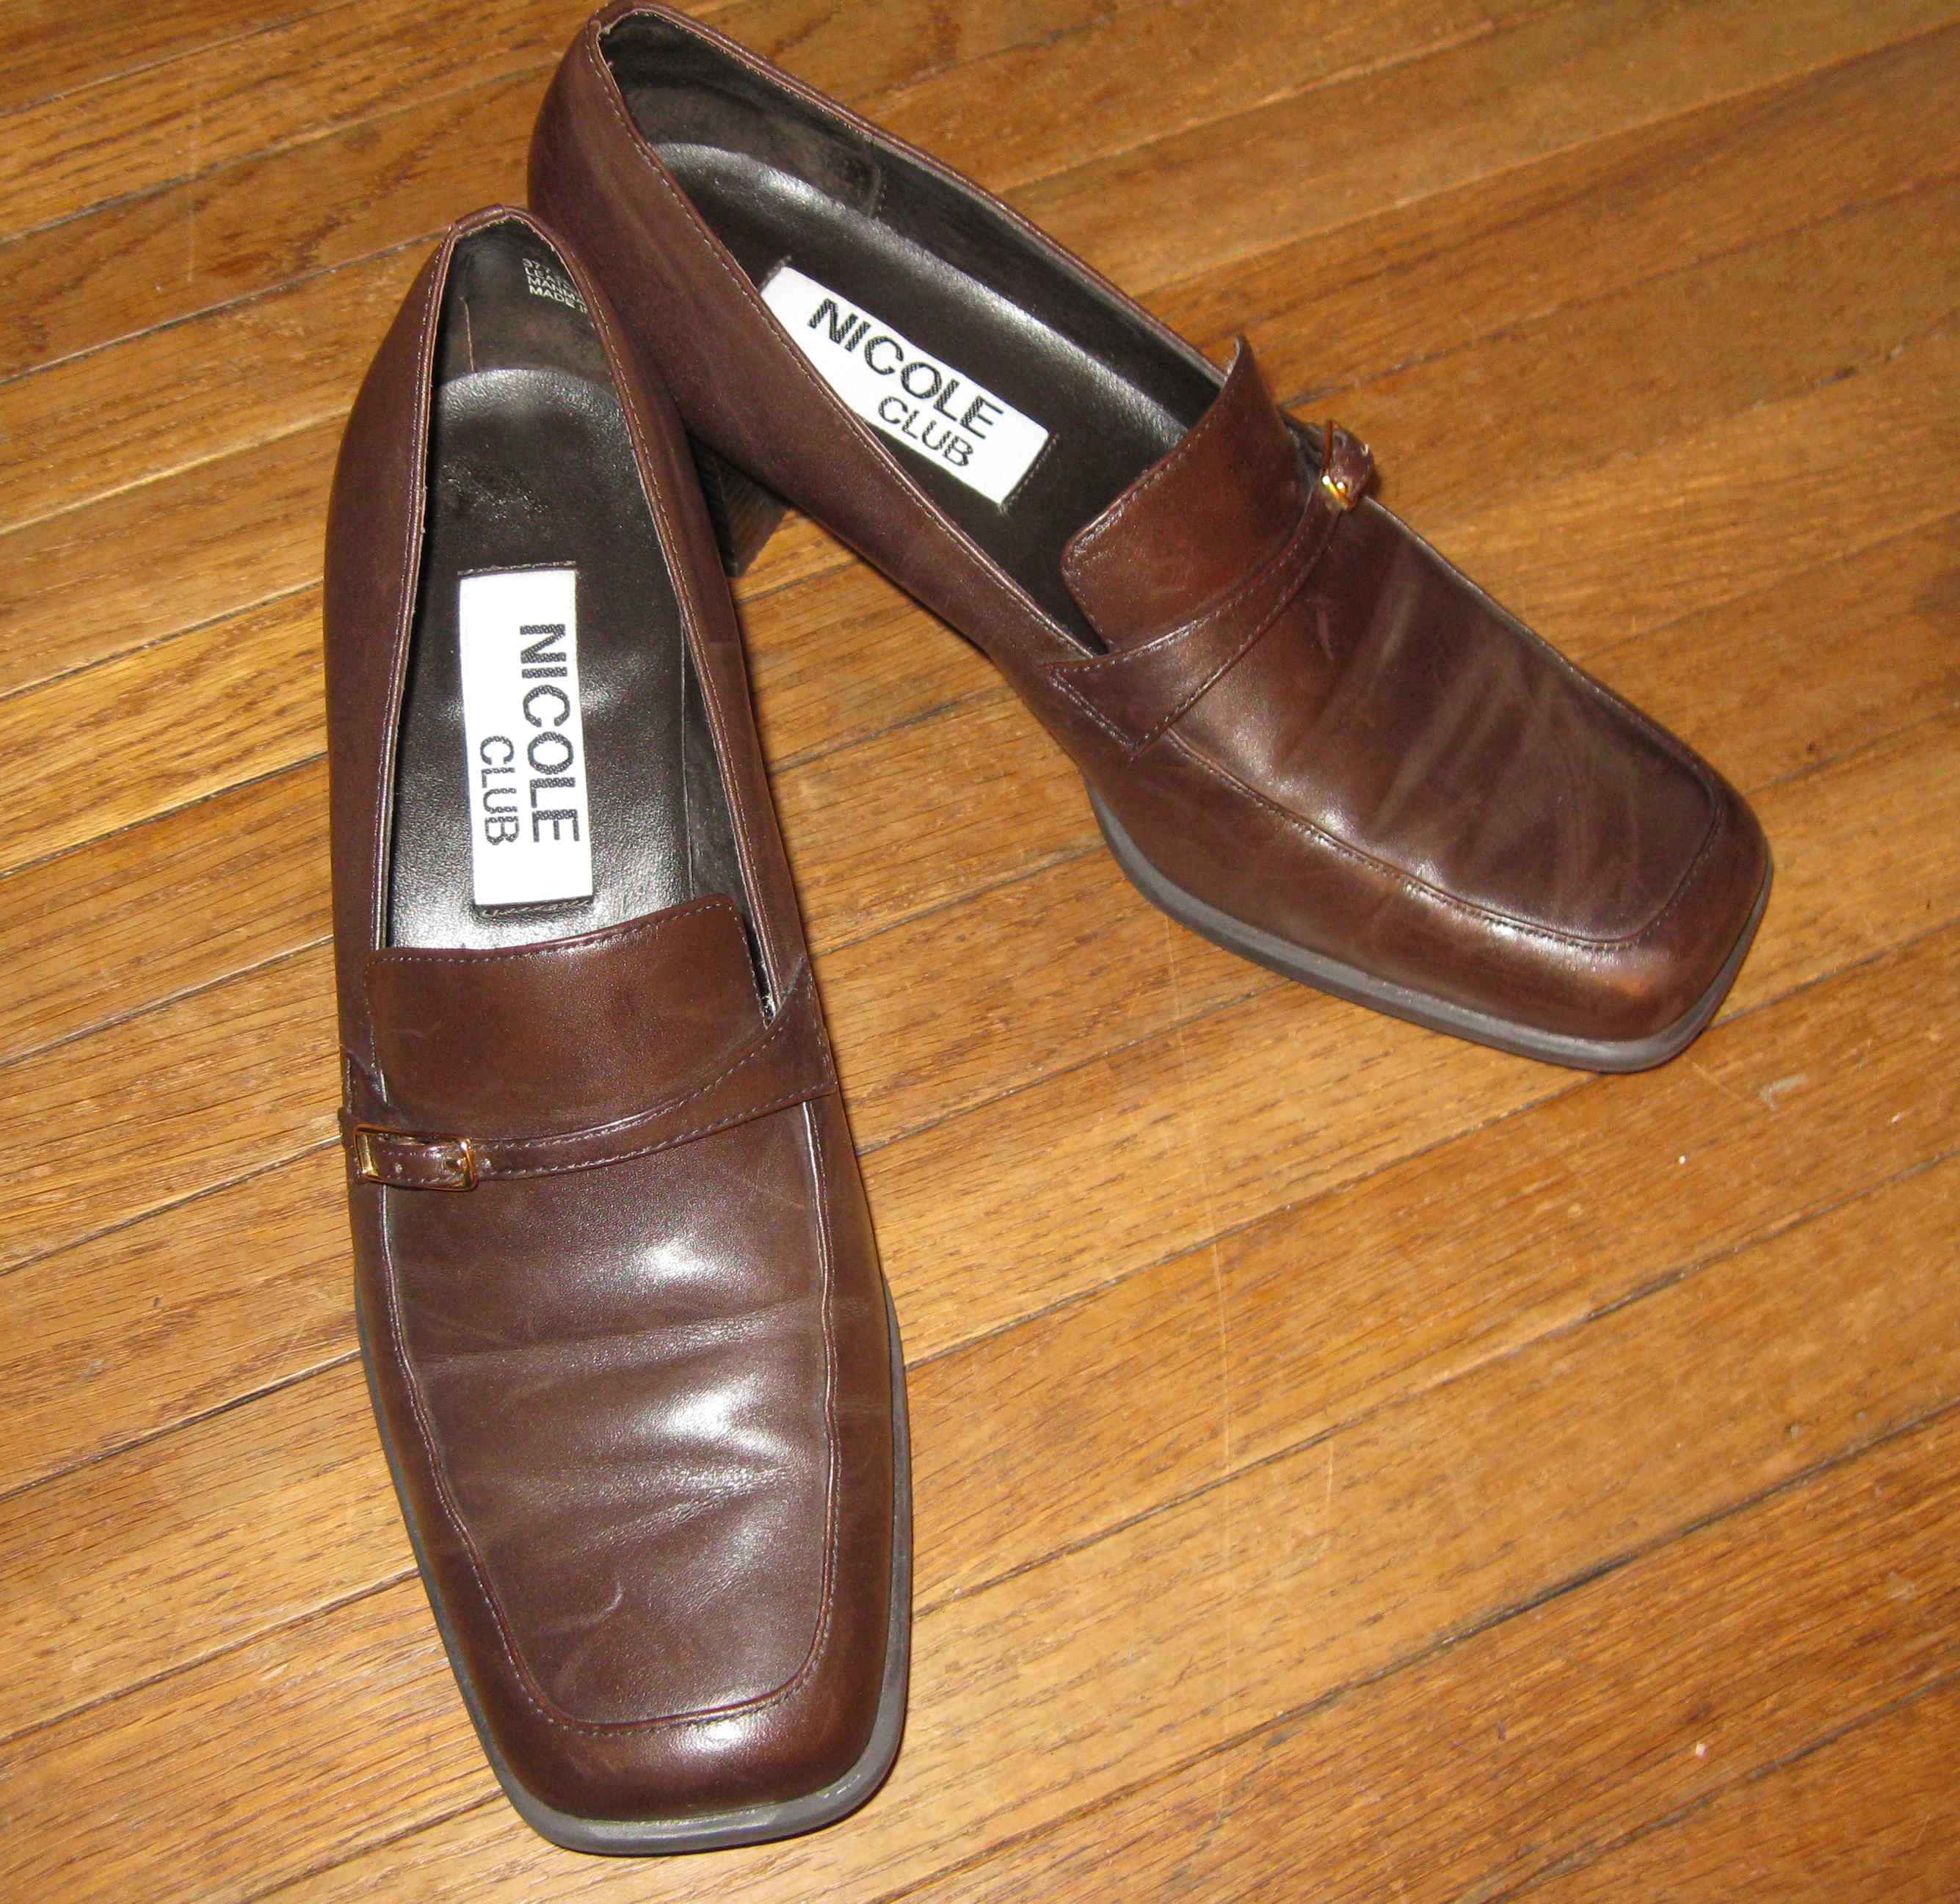 $6 shoes Better Brands consignment shop